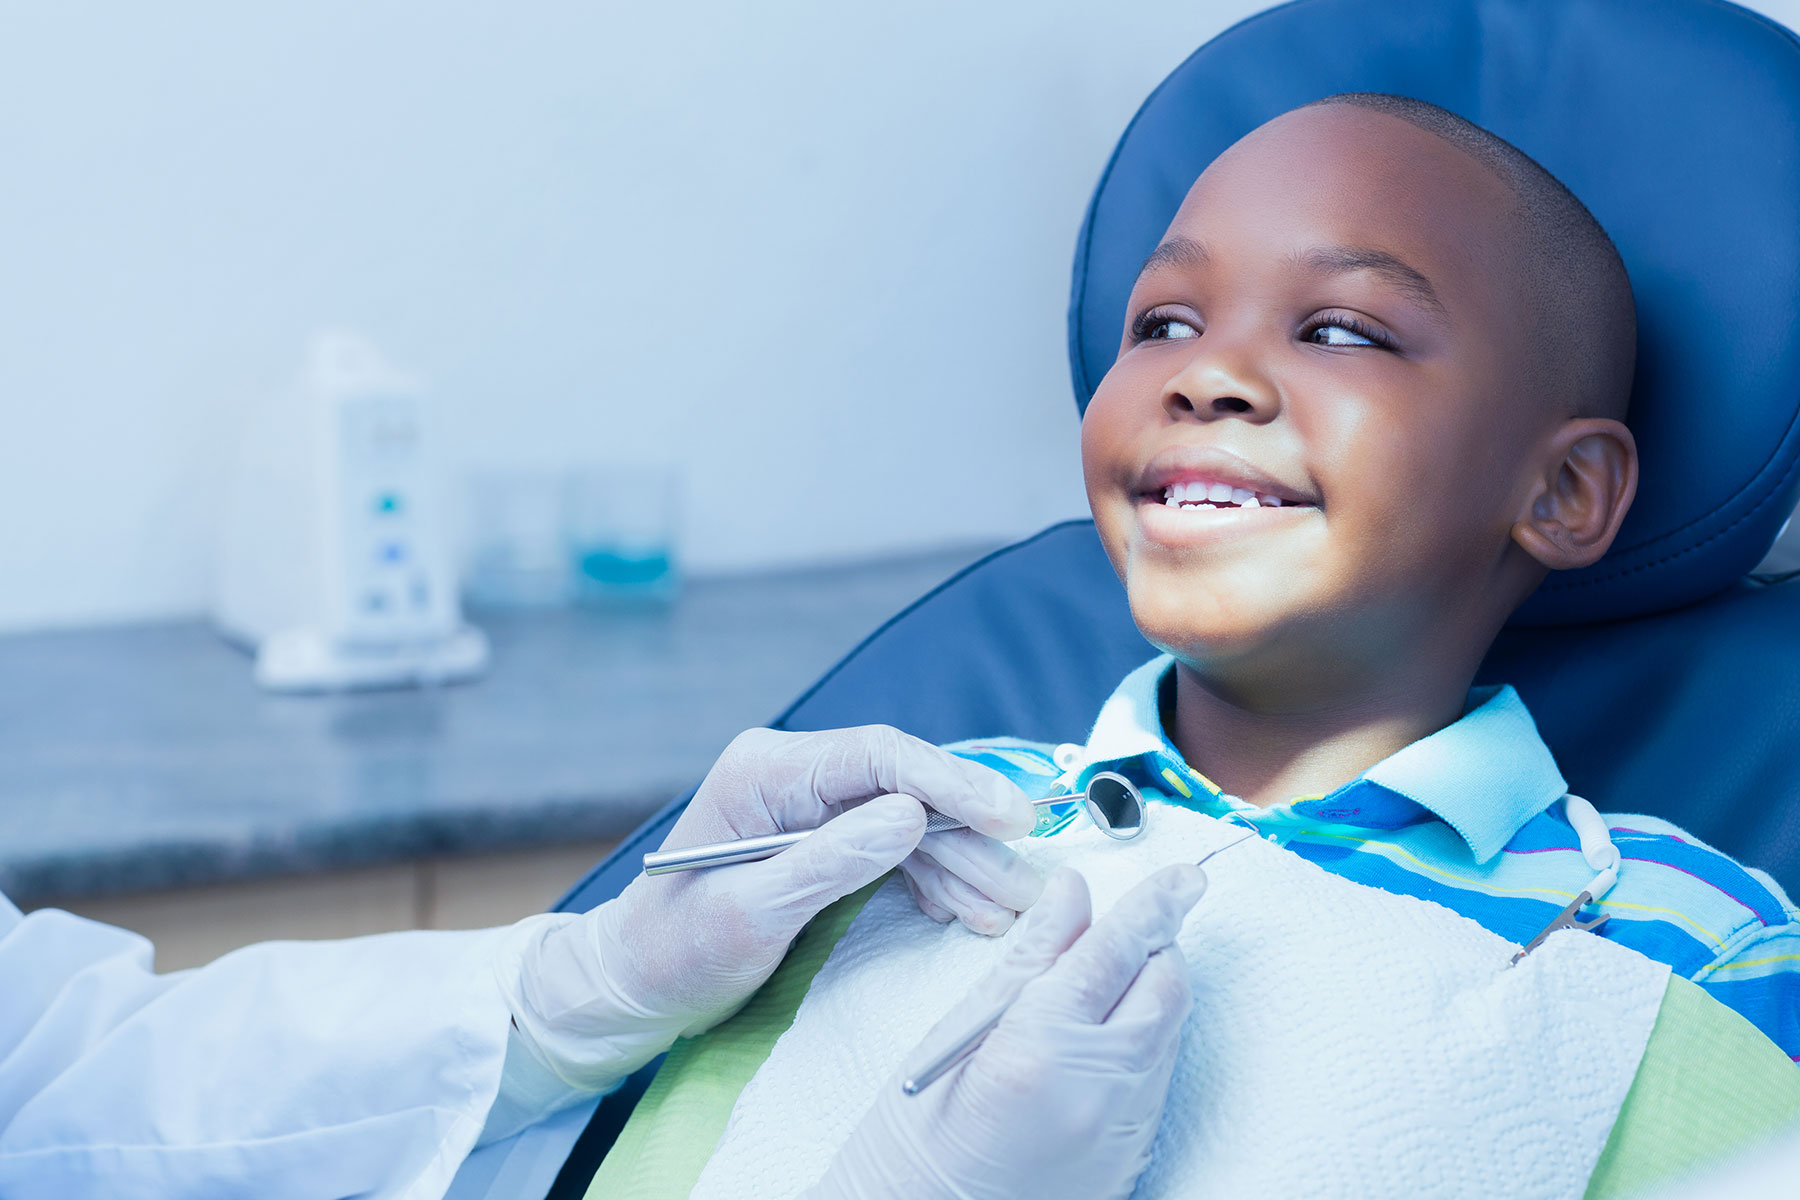 pediatric patient with dentist